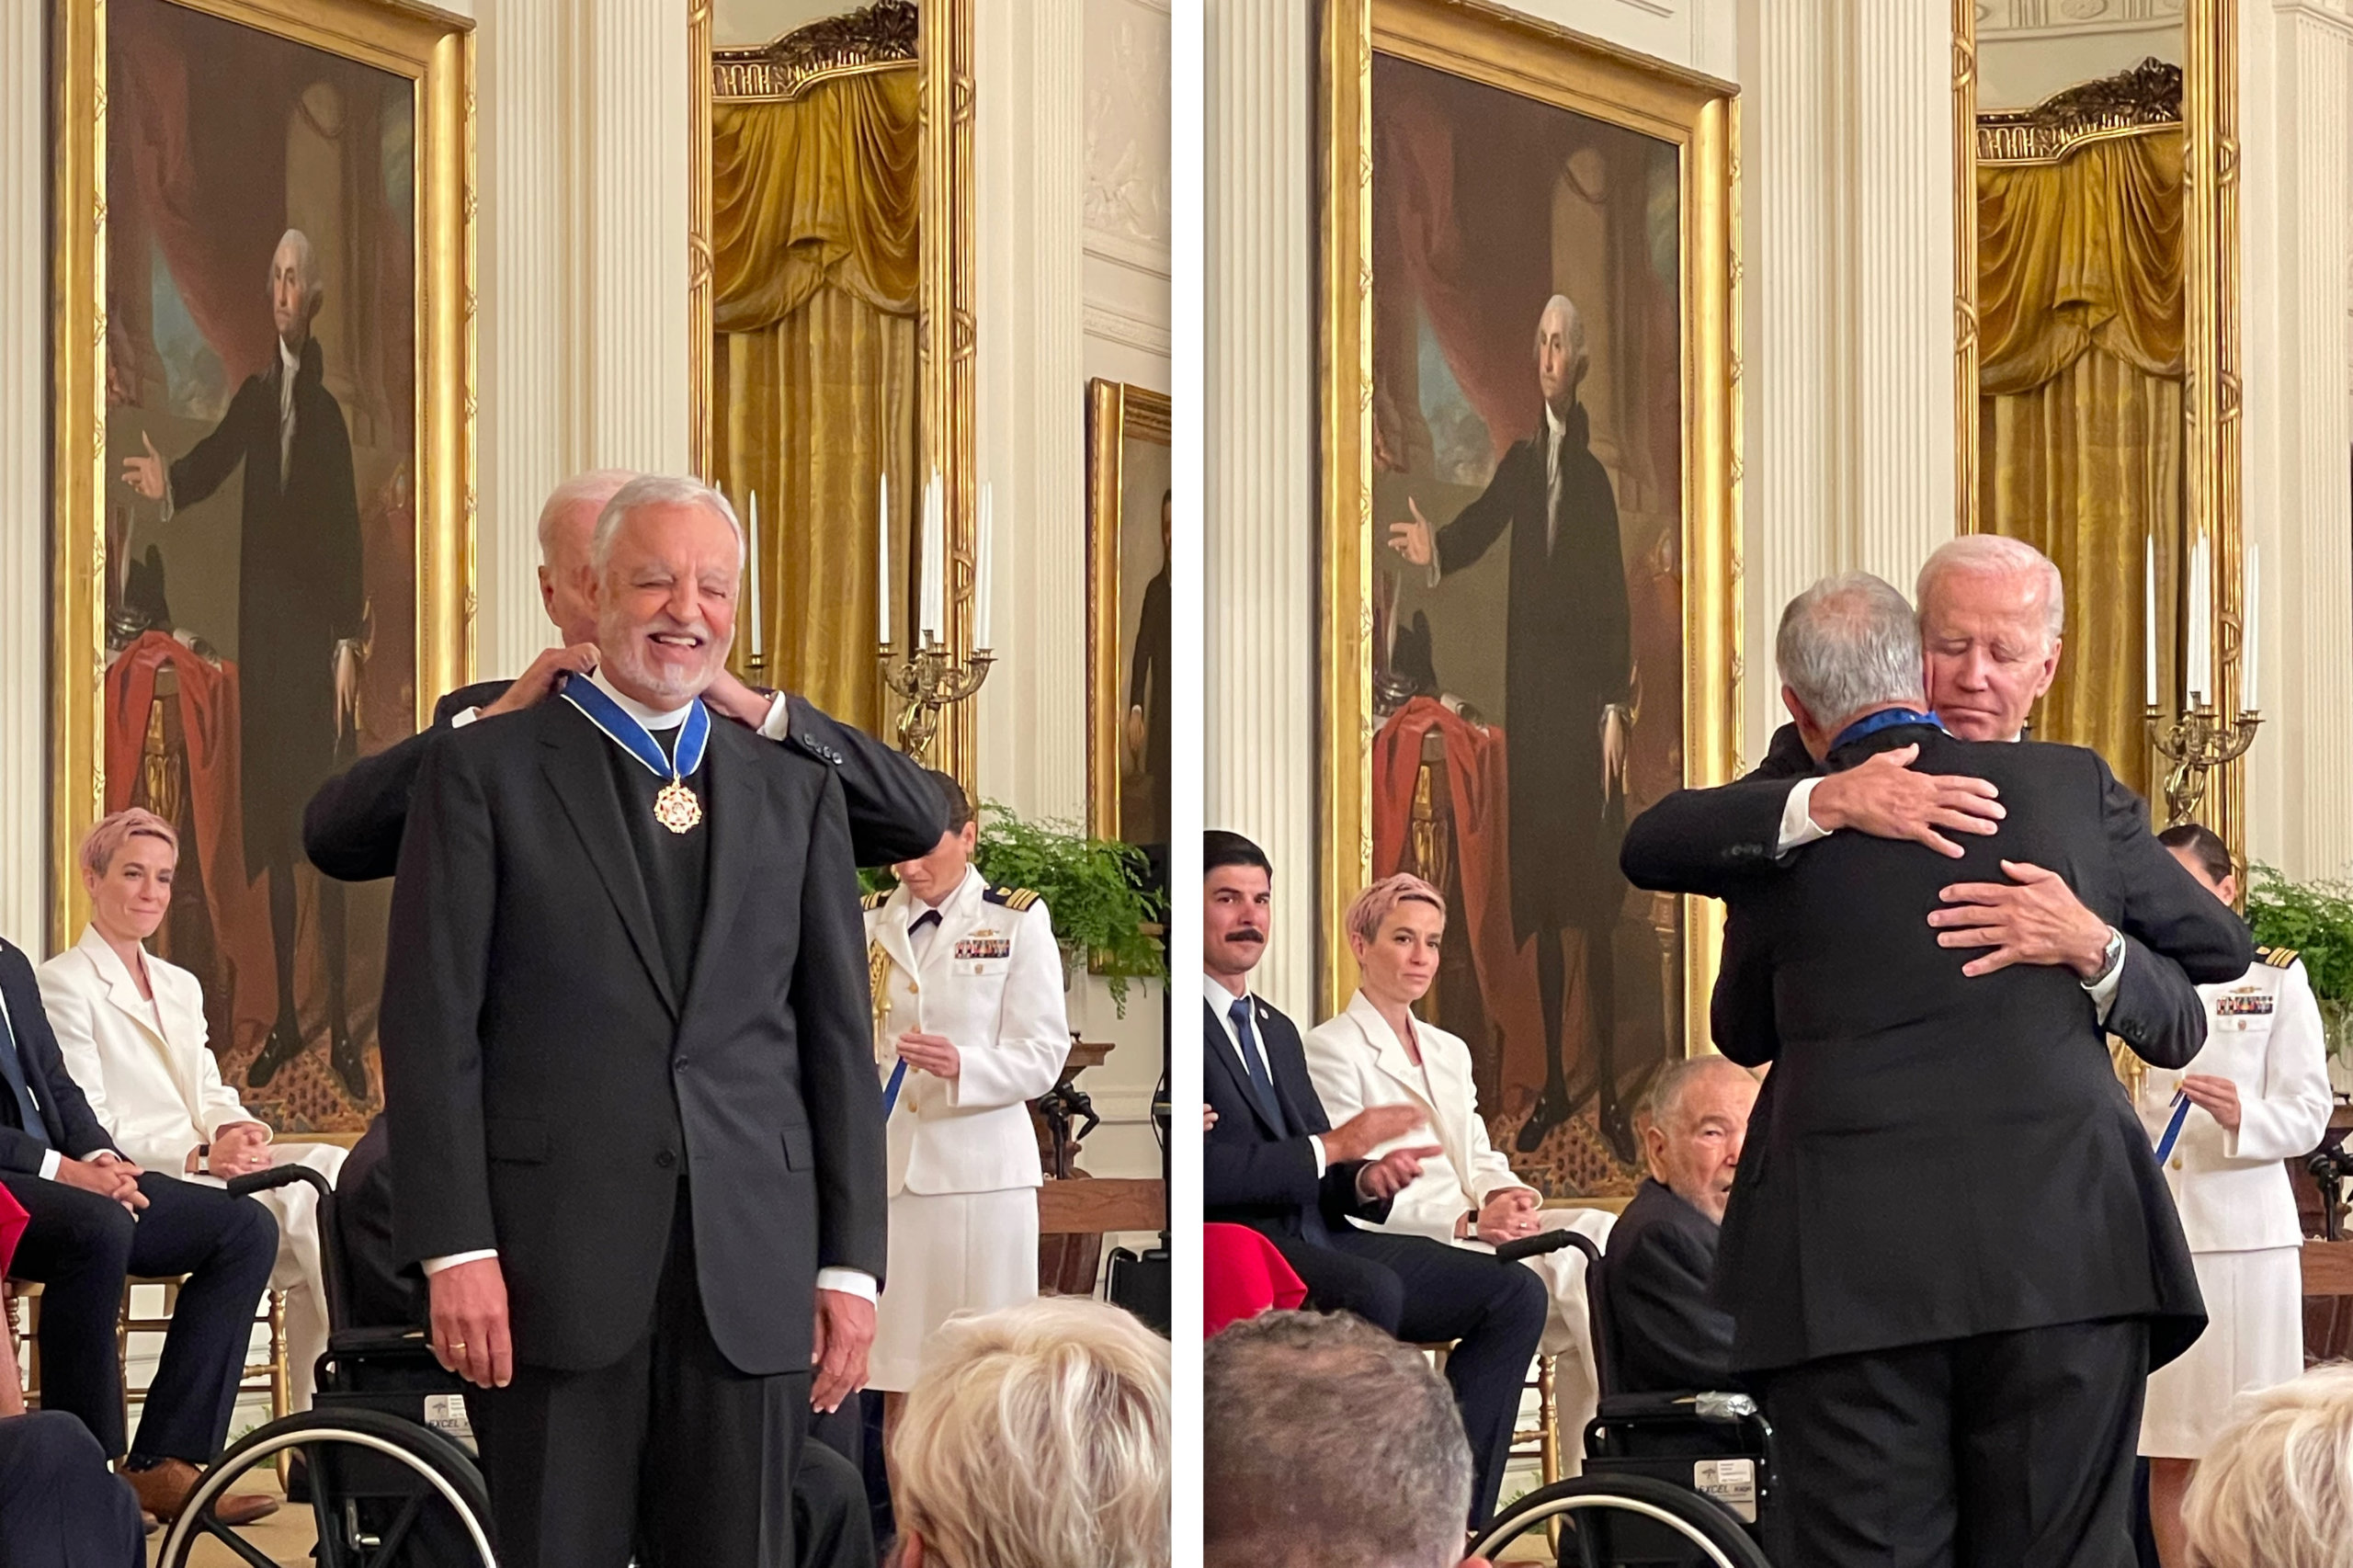 Father Alex Karloutsos joyfully receives the Presidential Medal of Freedom from President Joe Biden